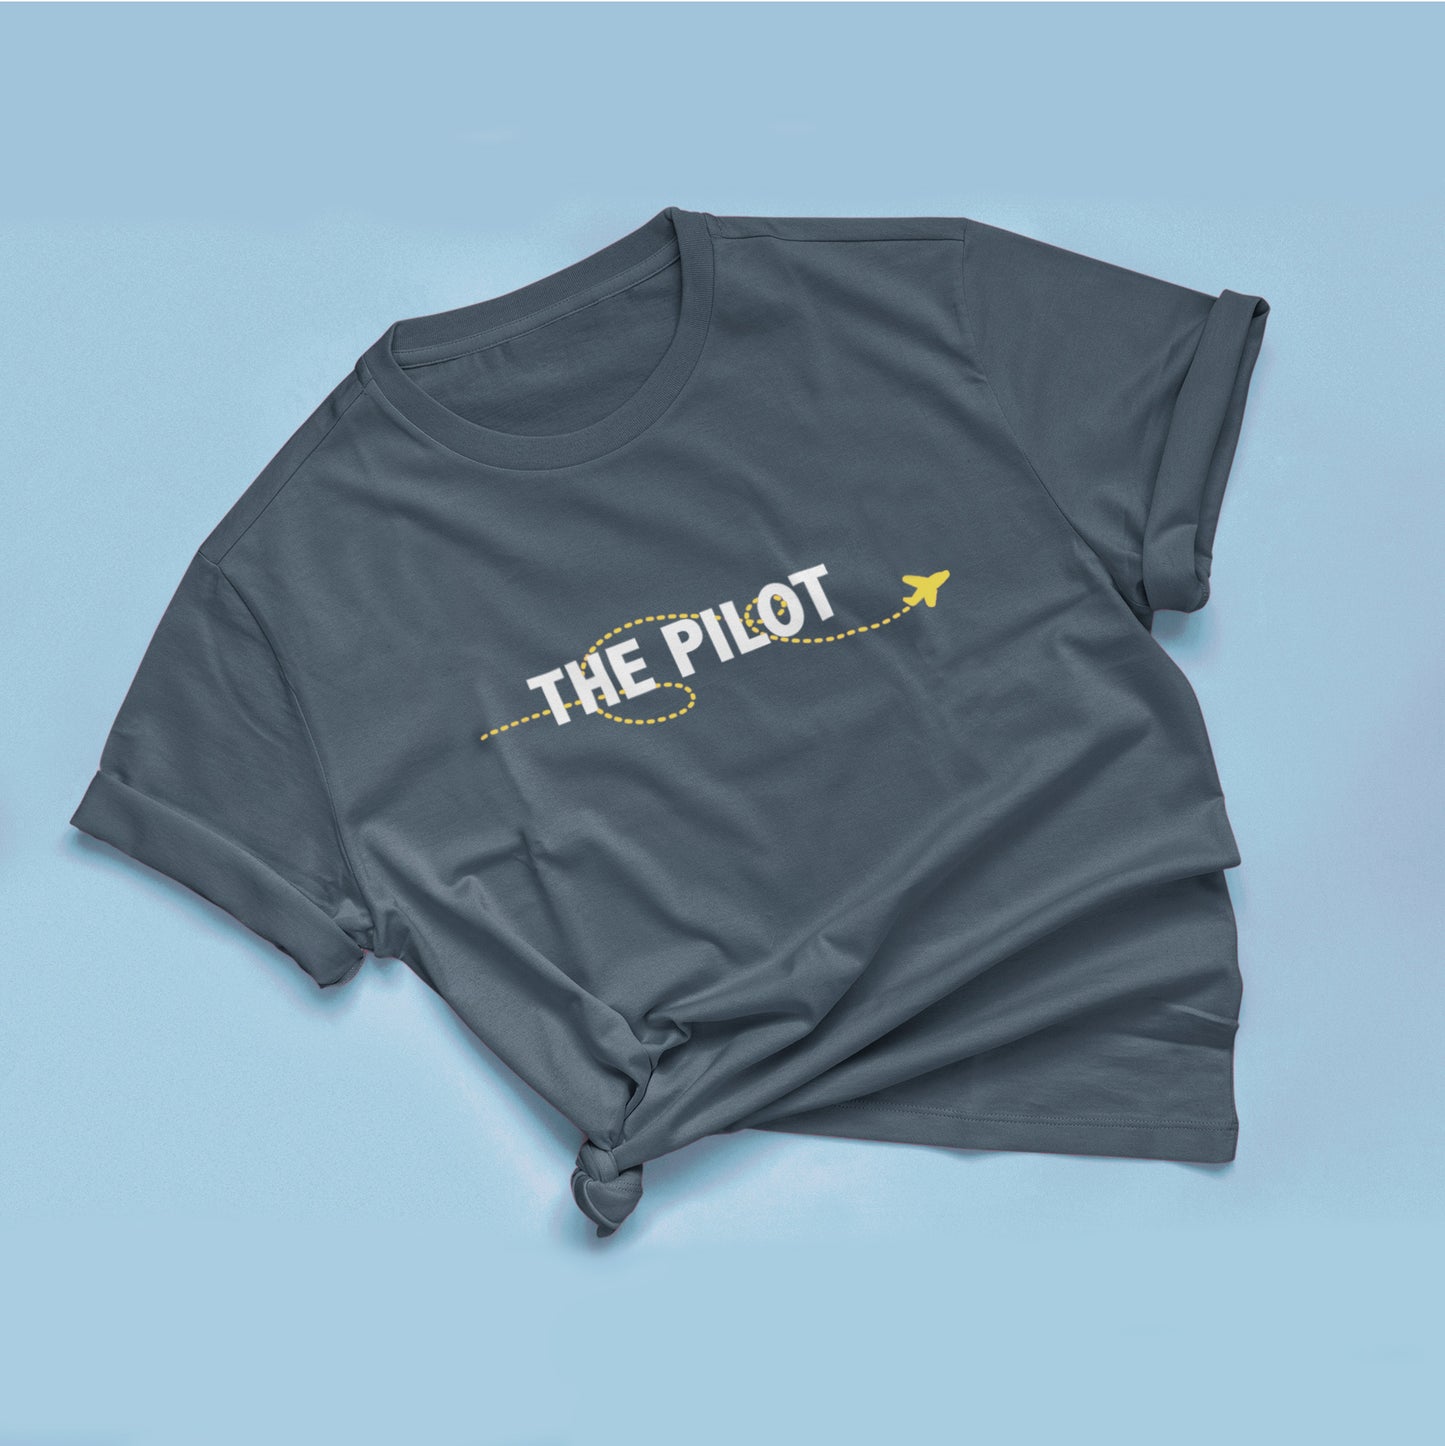 The Pilot T-shirt